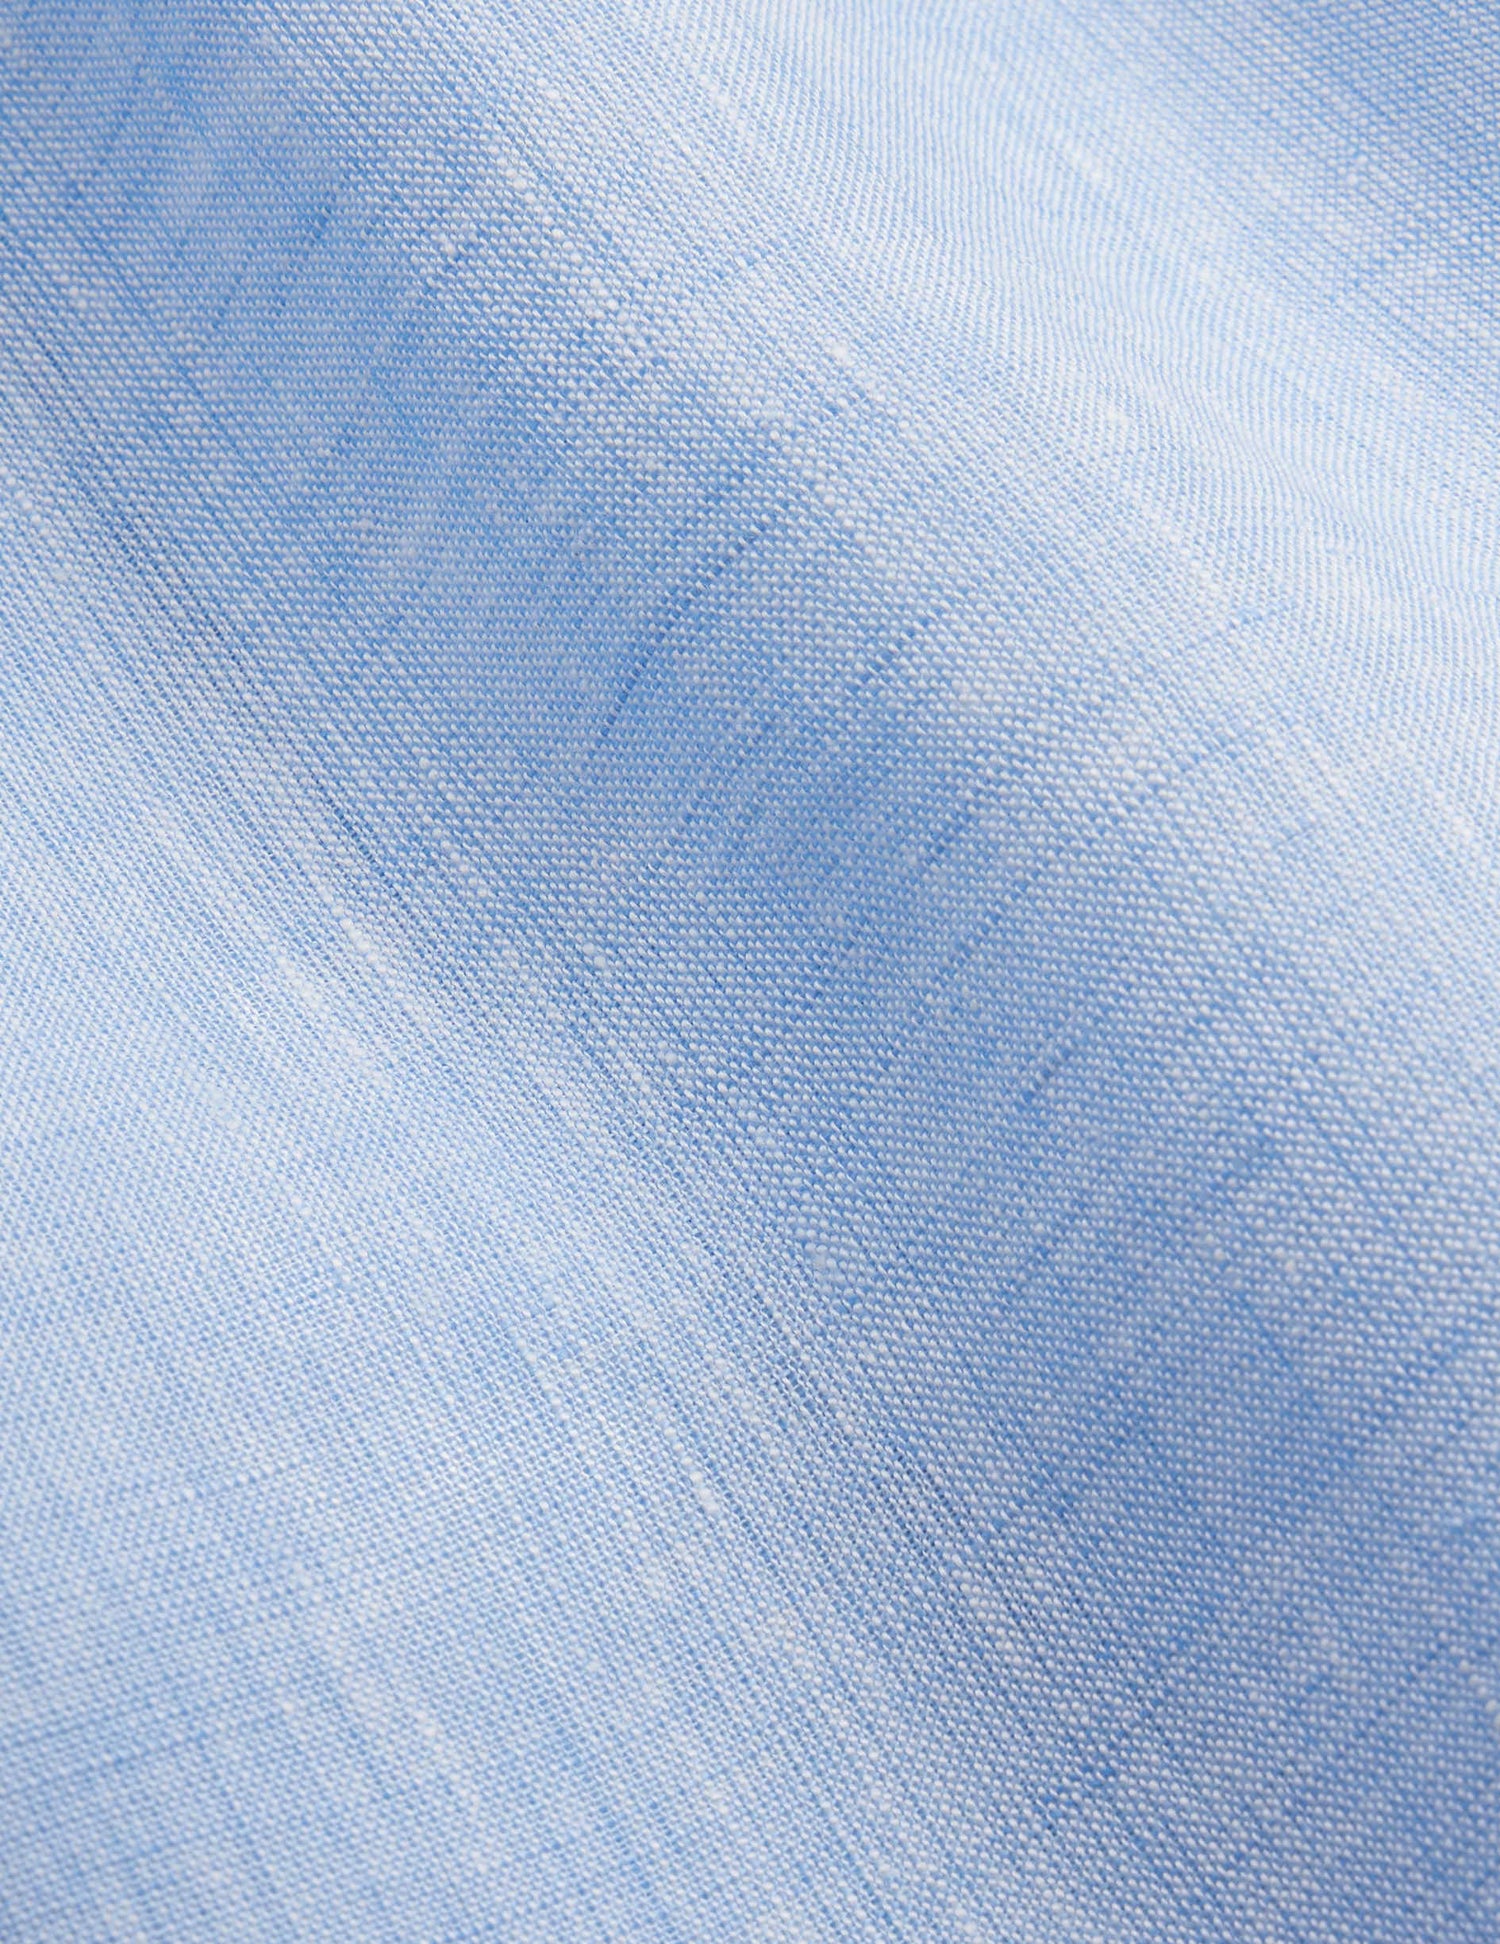 Auguste shirt in light blue linen - Linen - French Collar#5